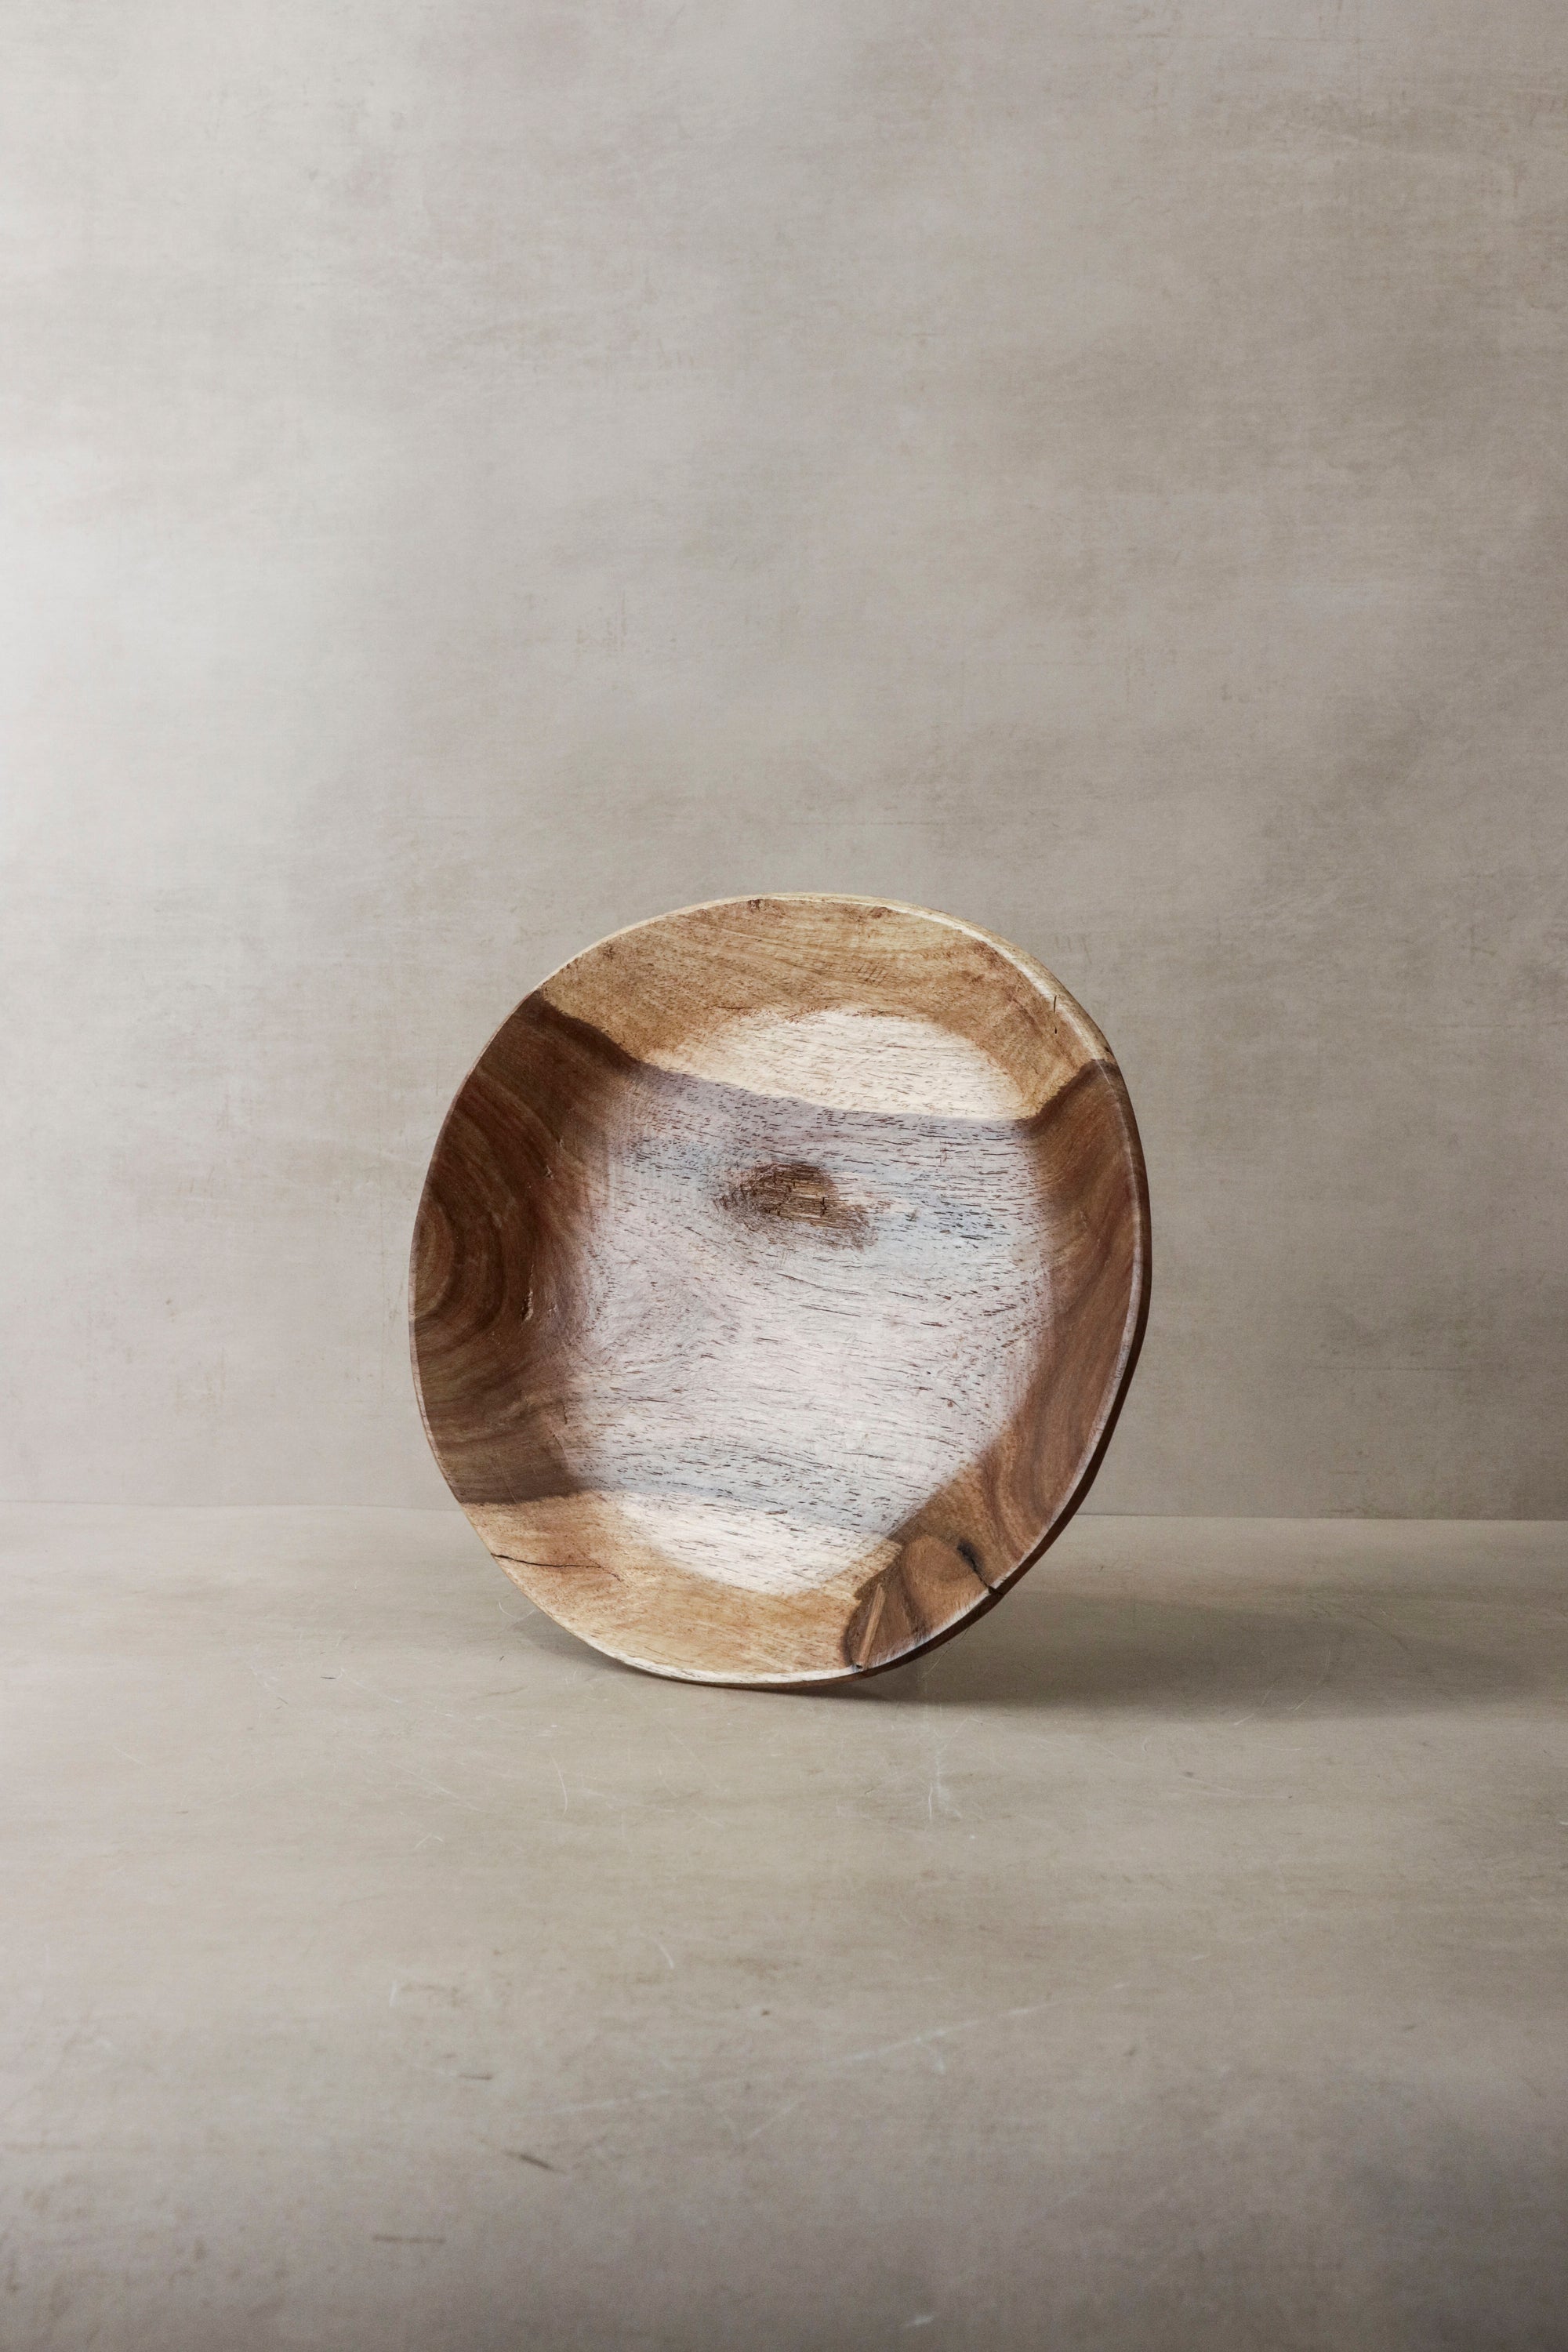 Handmade wooden bowl, Zimbabwe - 13.1